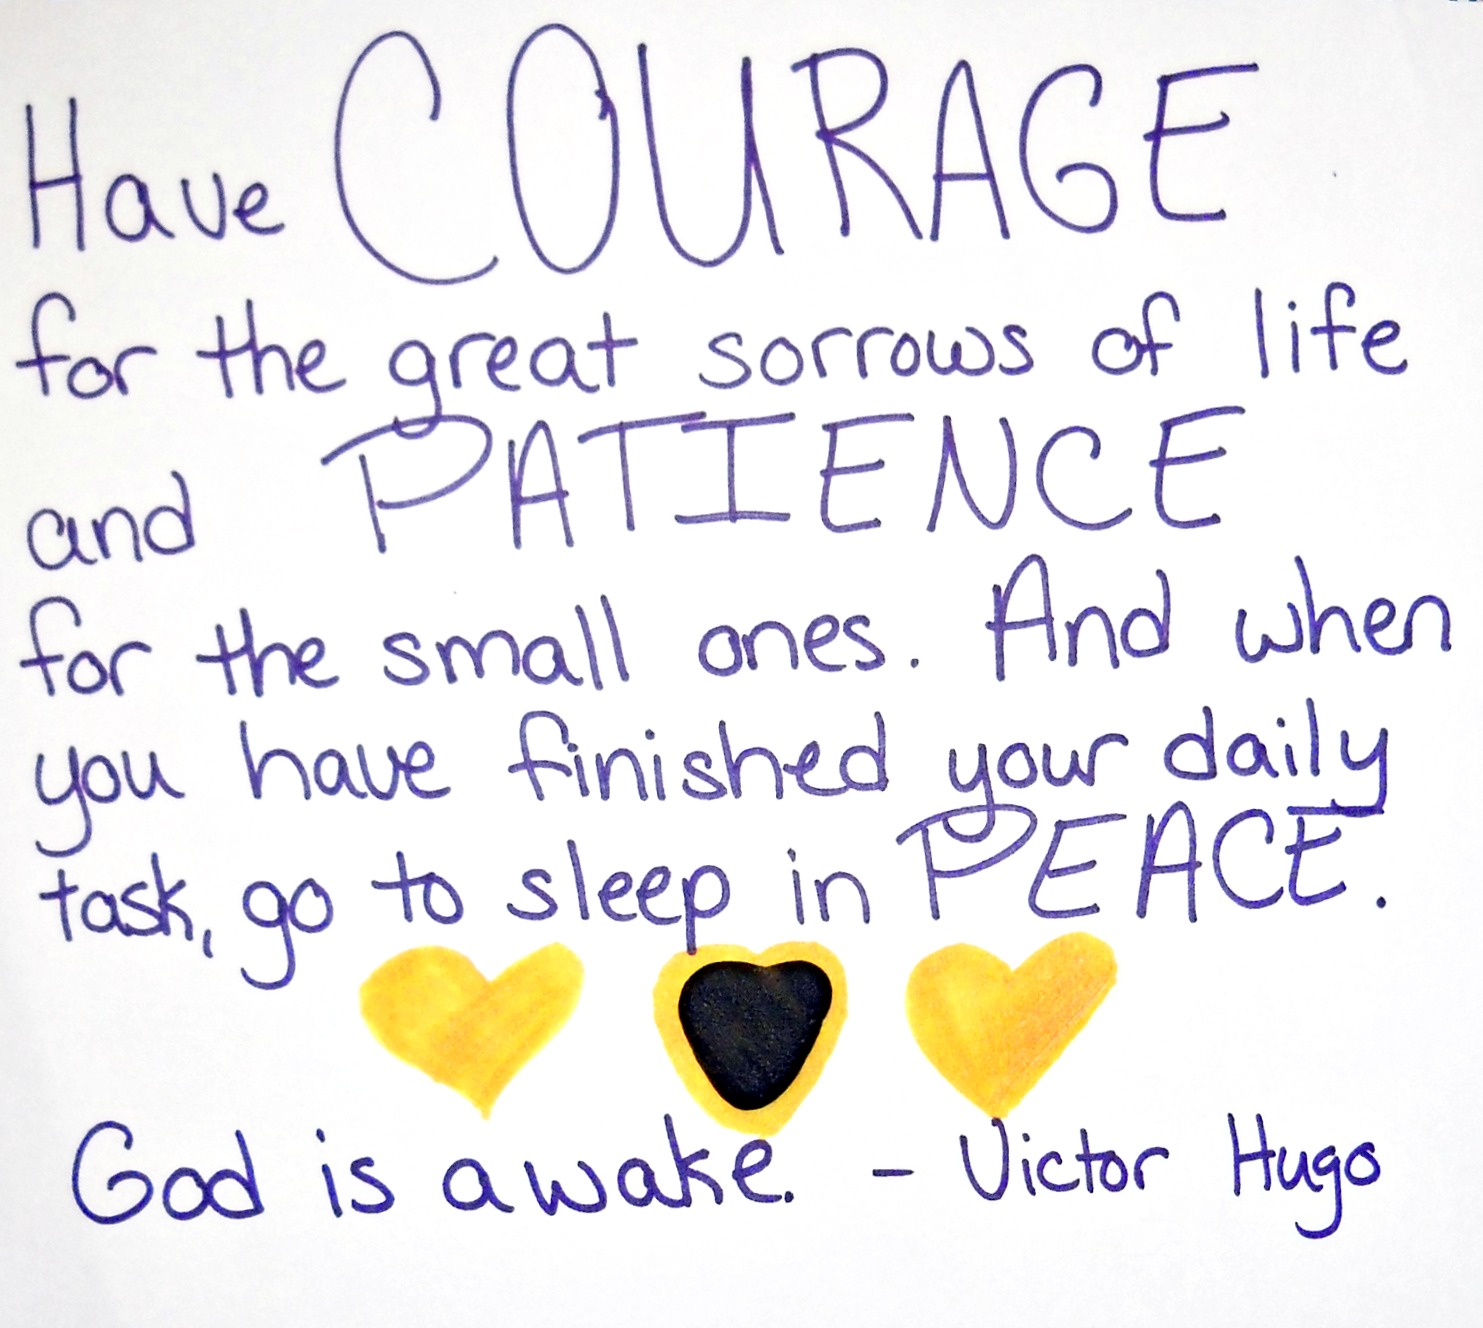 Victor Hugo Quote